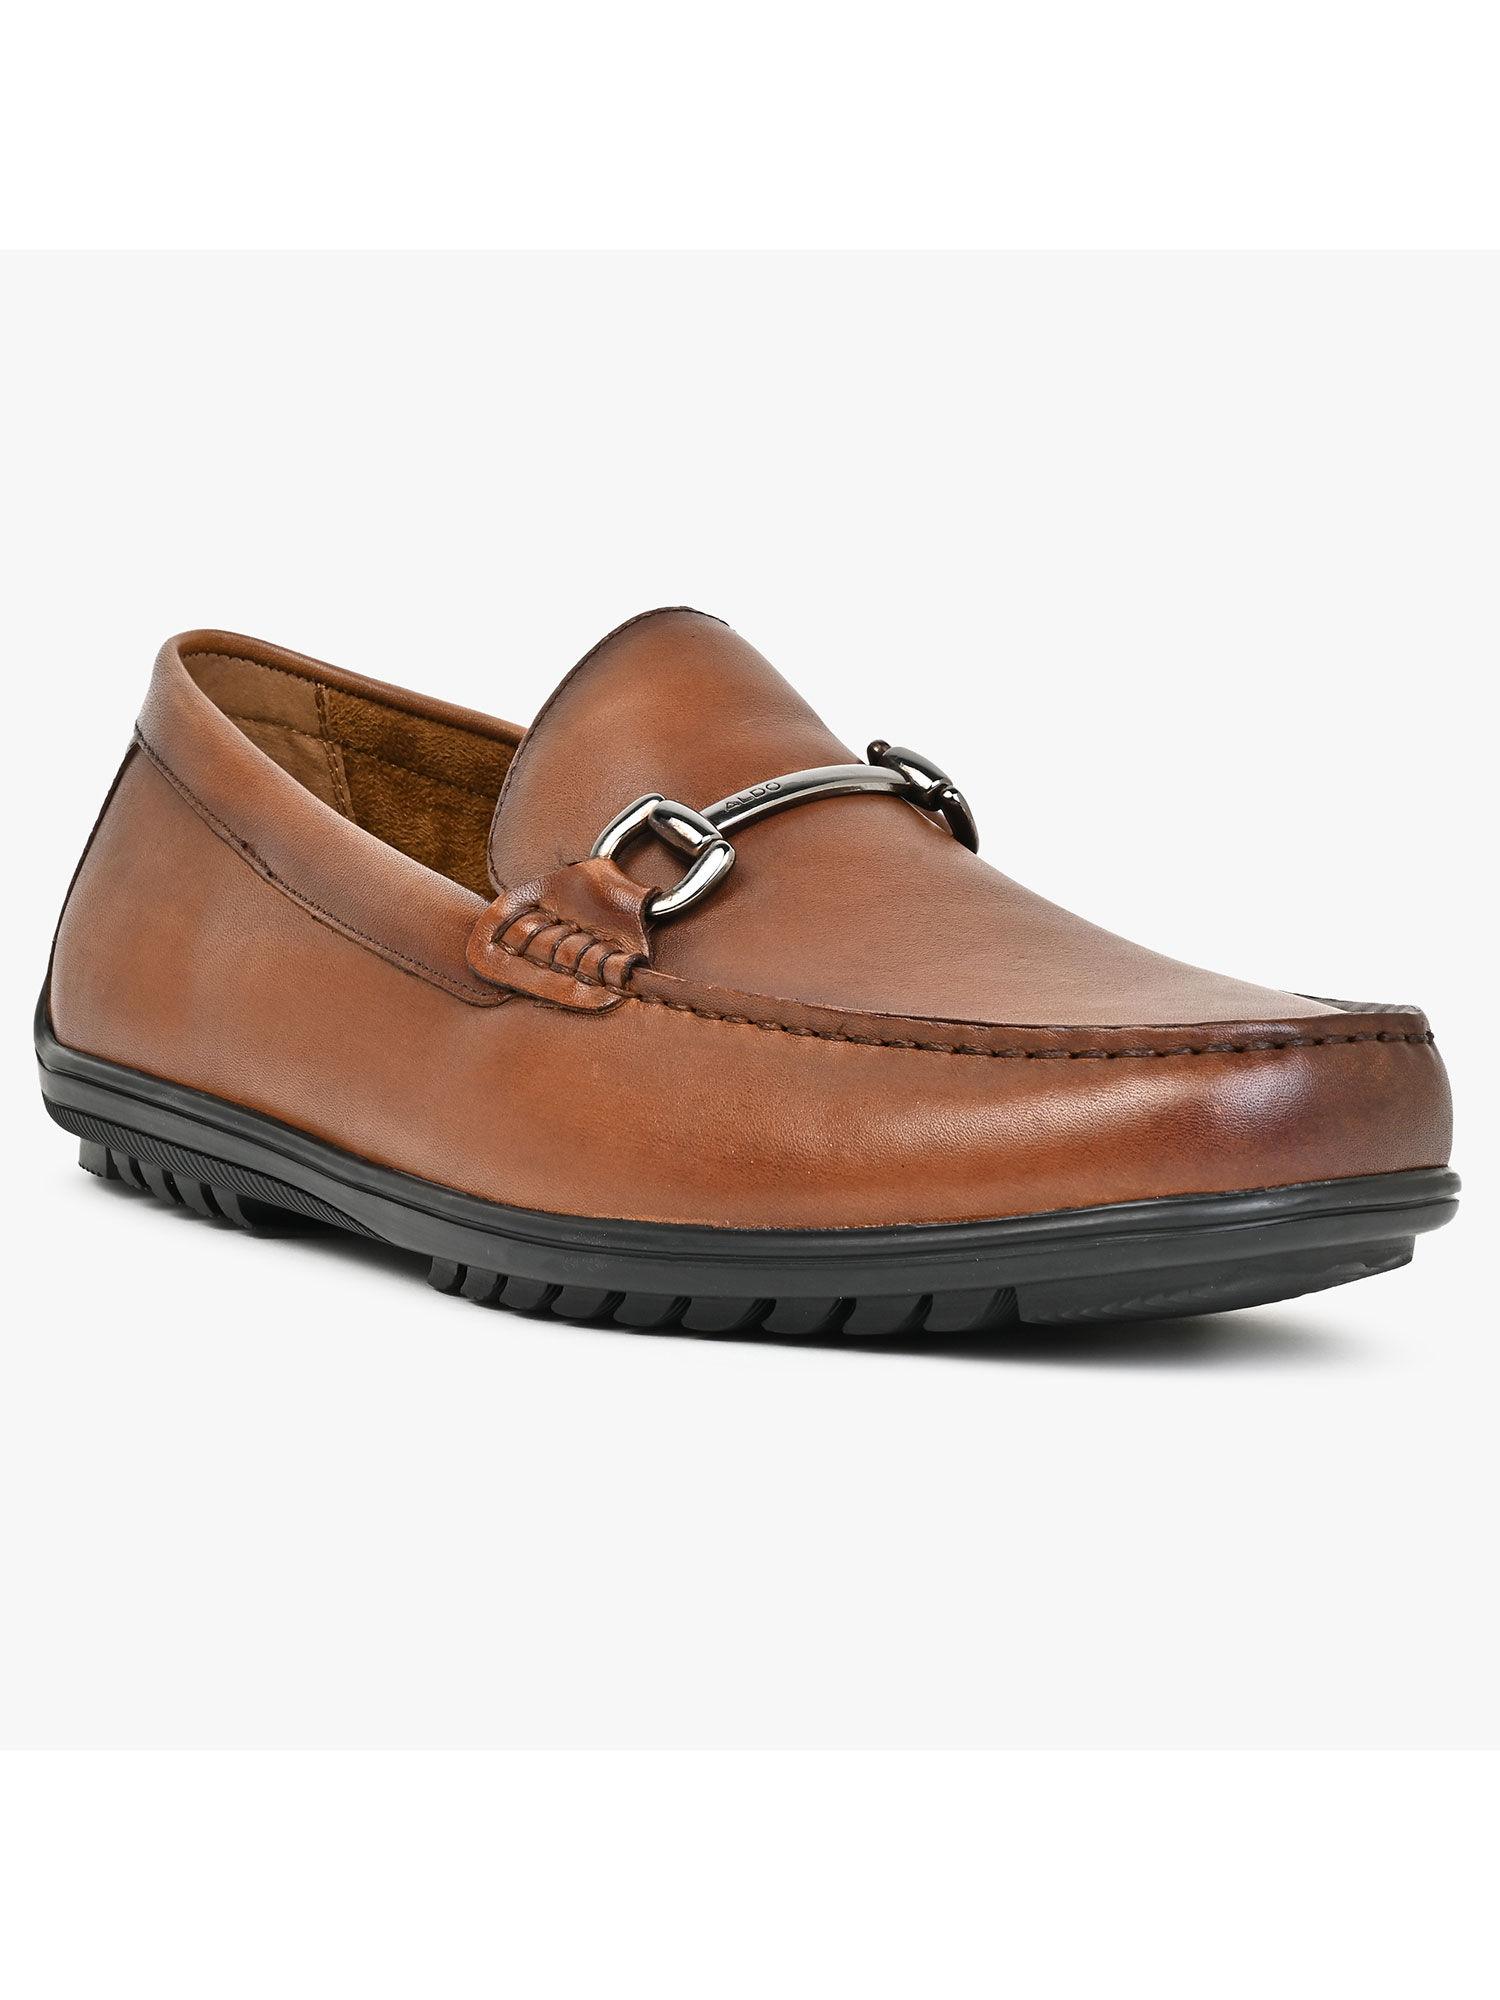 men moccasins shoes brown